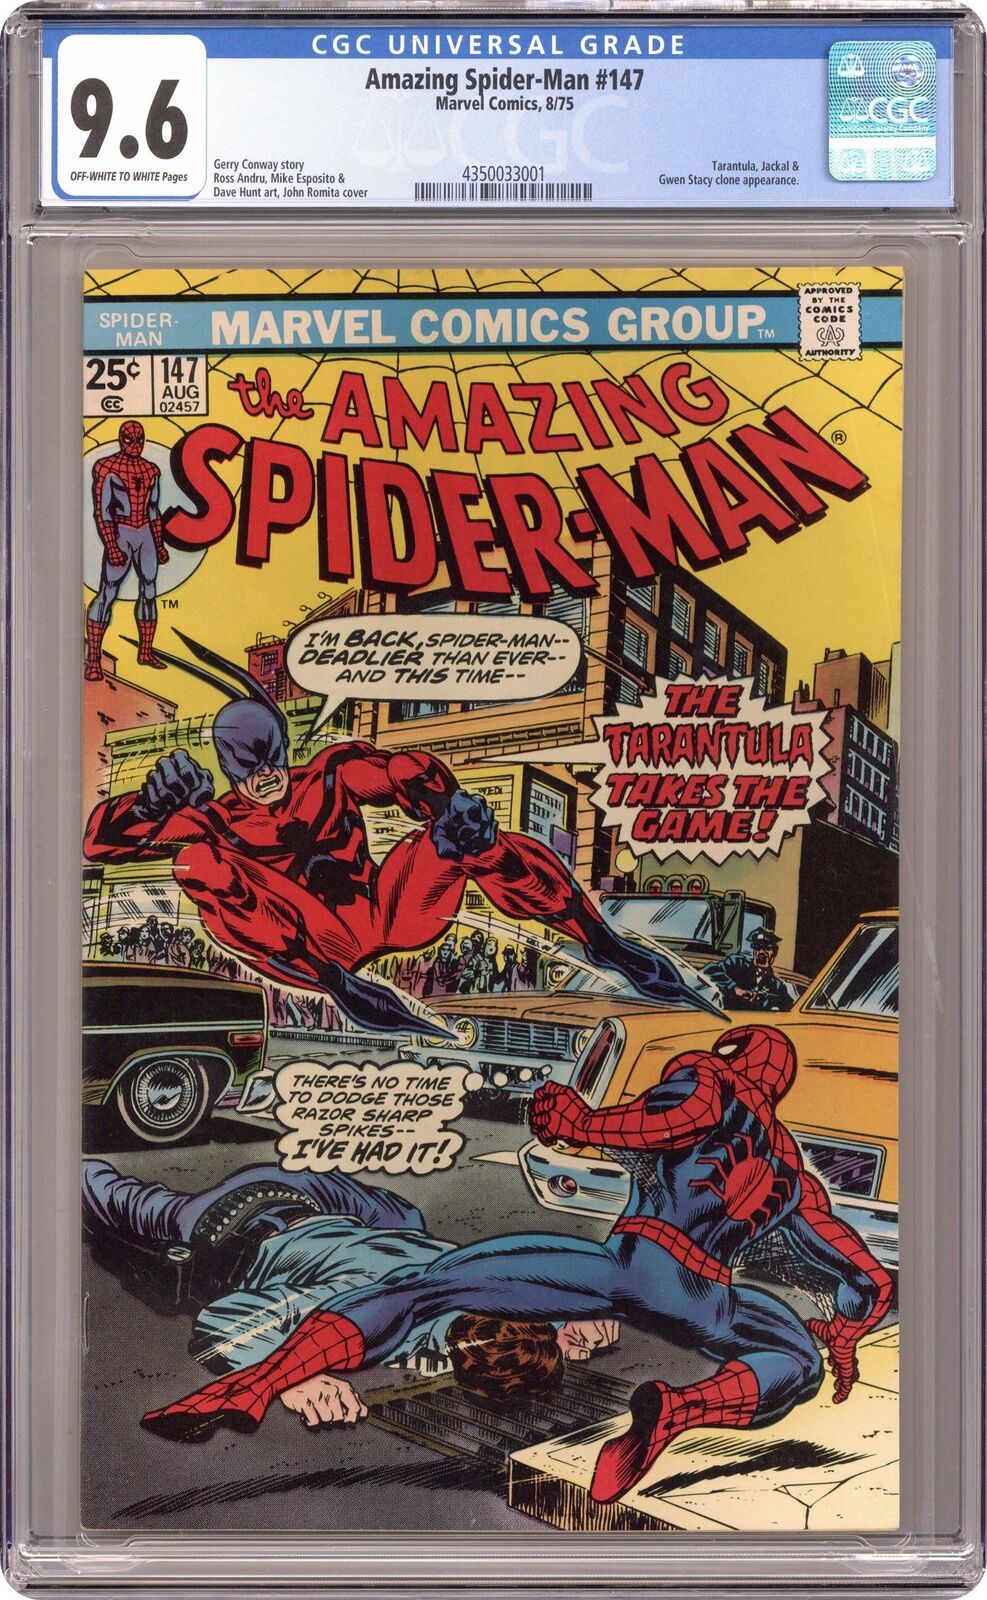 Amazing Spider-Man #147 CGC 9.6 1975 4350033001